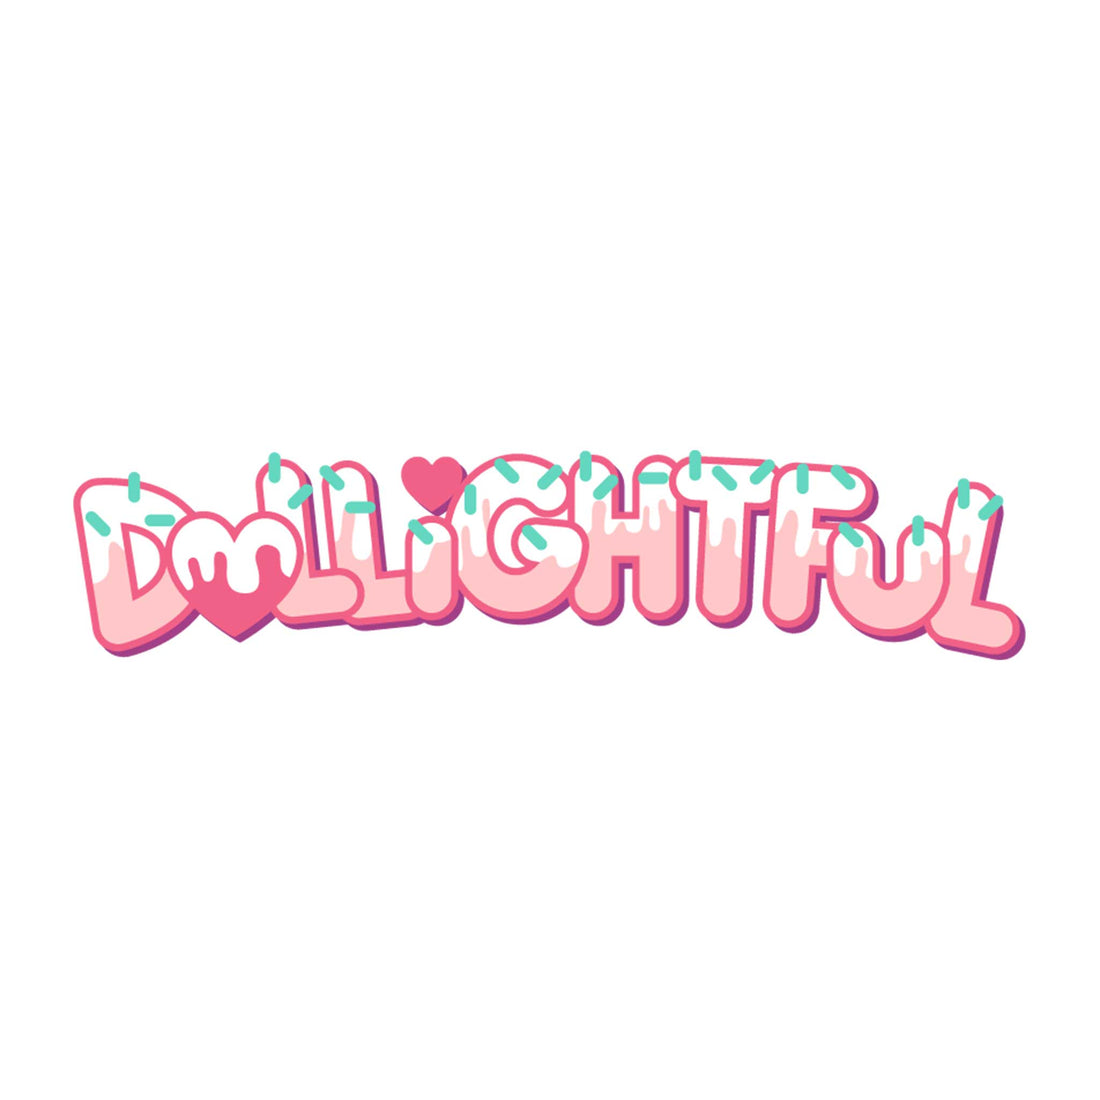 Doll Artist Feature: Dollightful